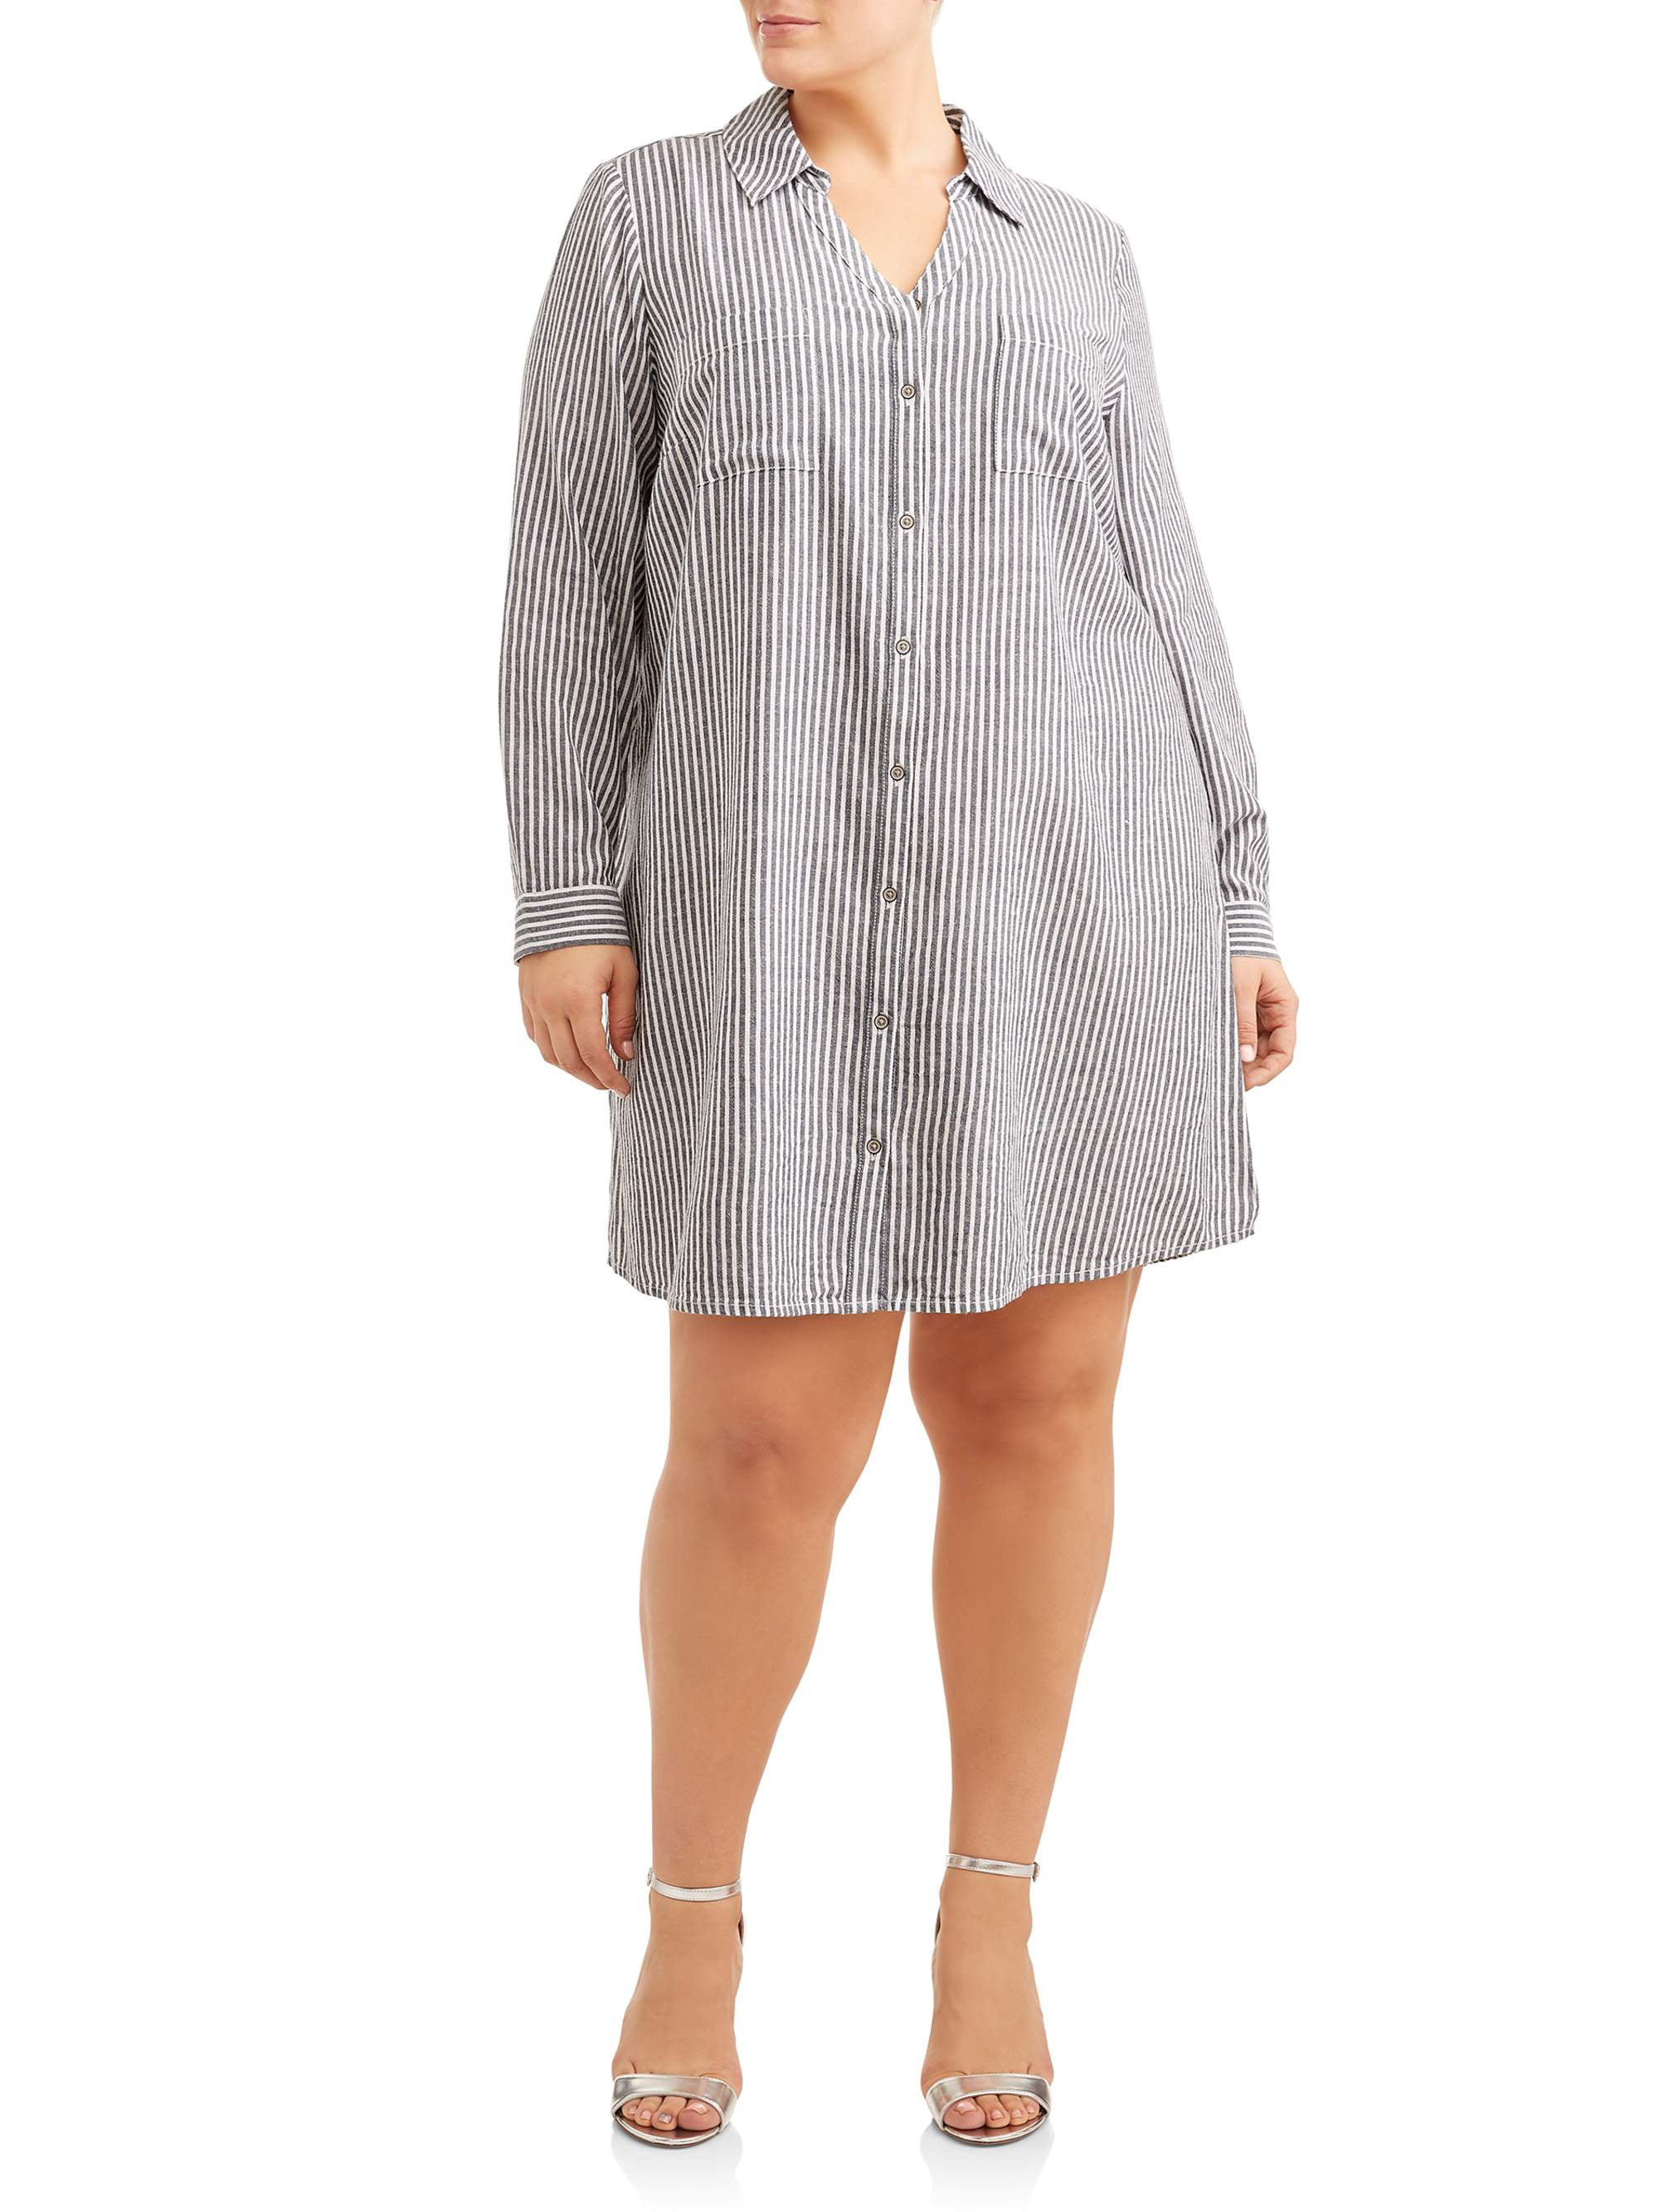 Buy > plus size white button down shirt dress > in stock